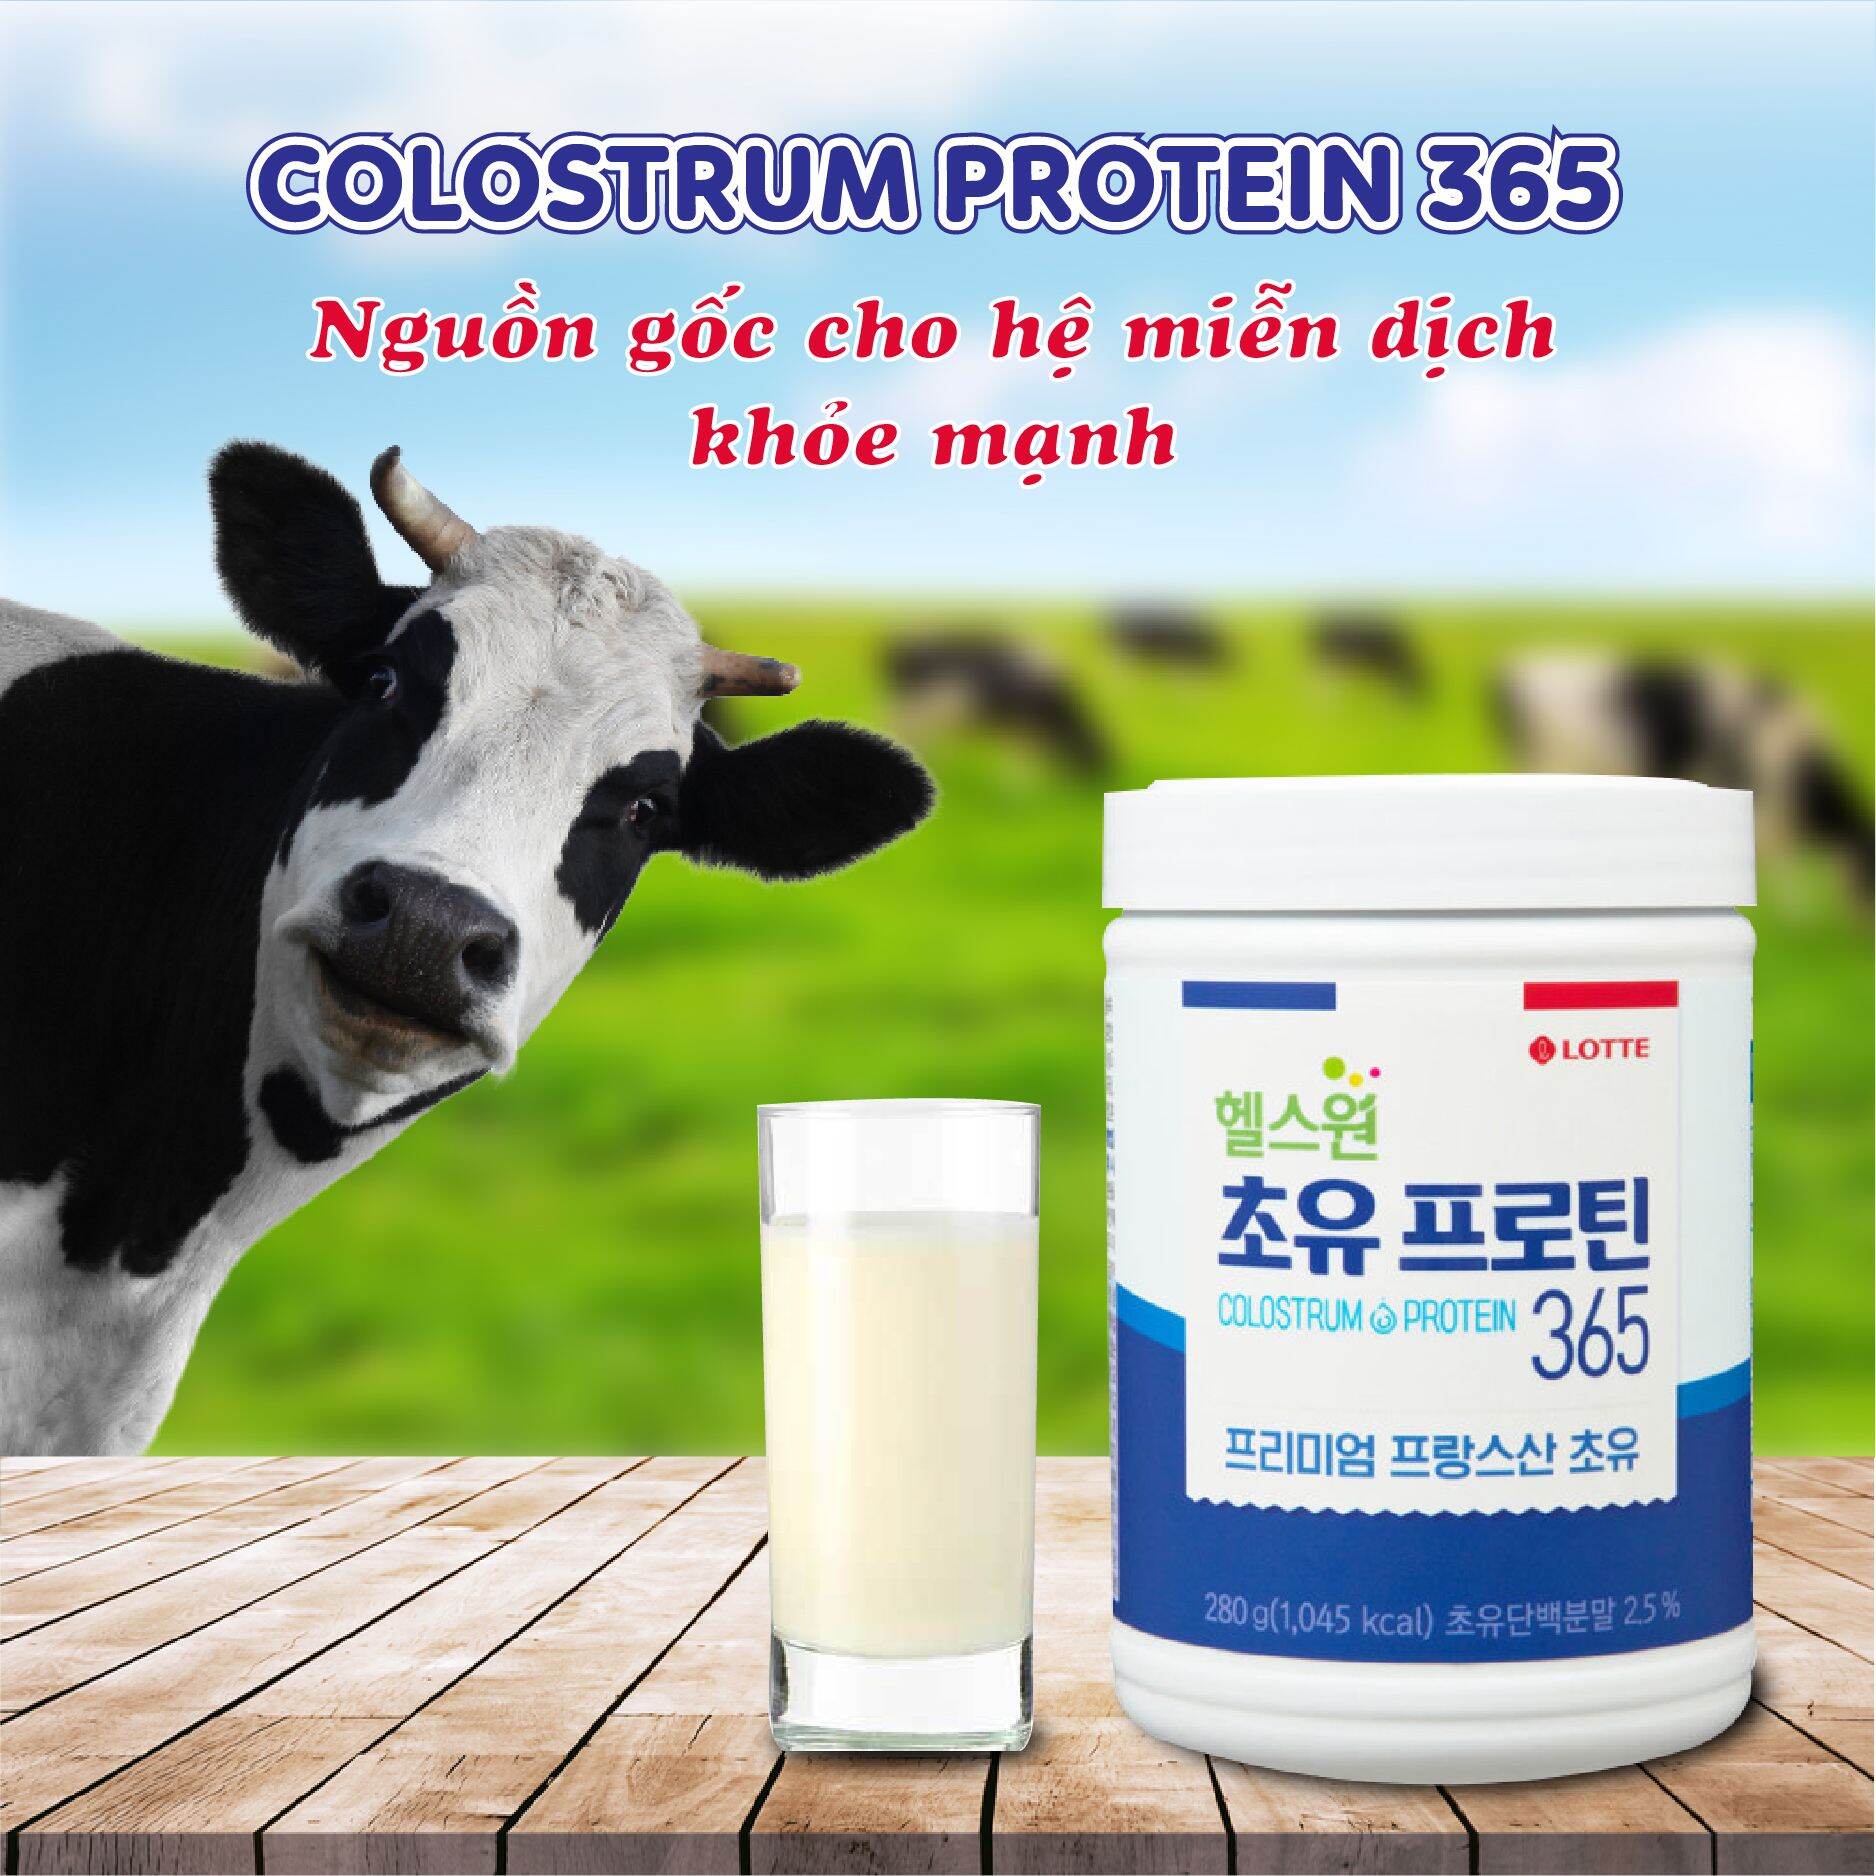 Sữa Non COLOSTRUM PROTEIN 365 - Nguồn gốc cho hệ miễn dịch khỏe mạnh